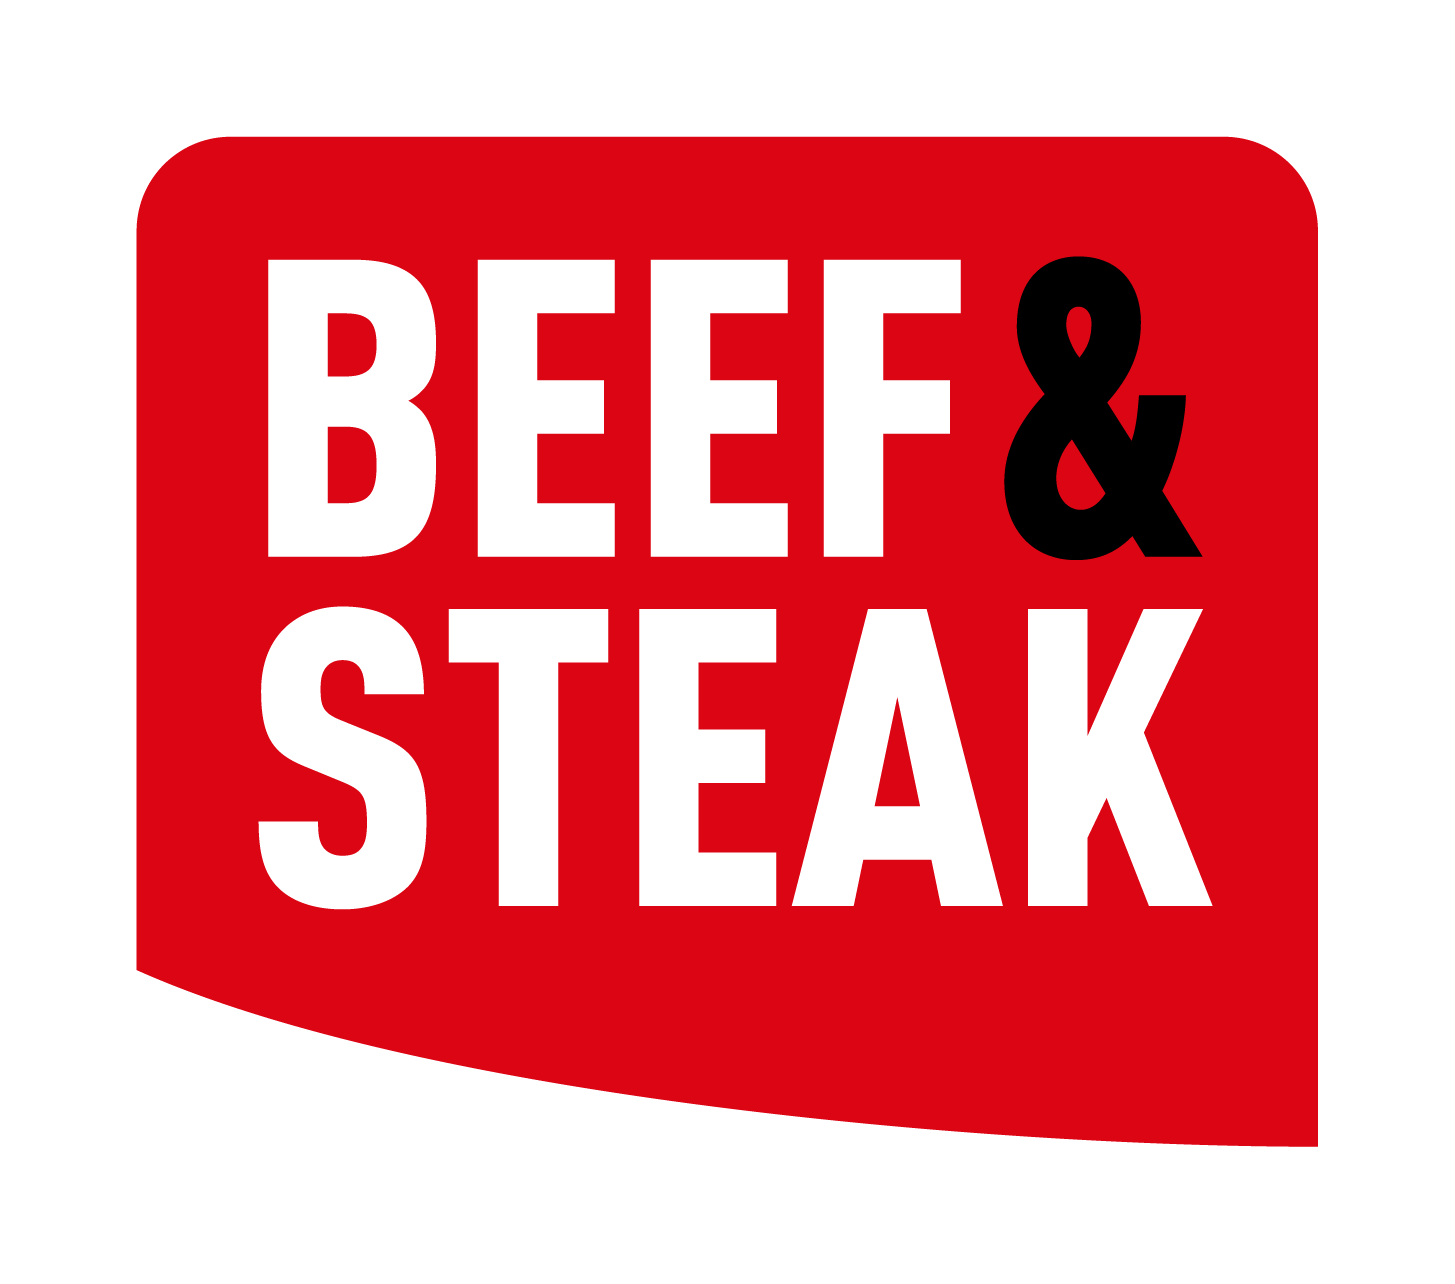 Miguel Vergara Tomahawk steak